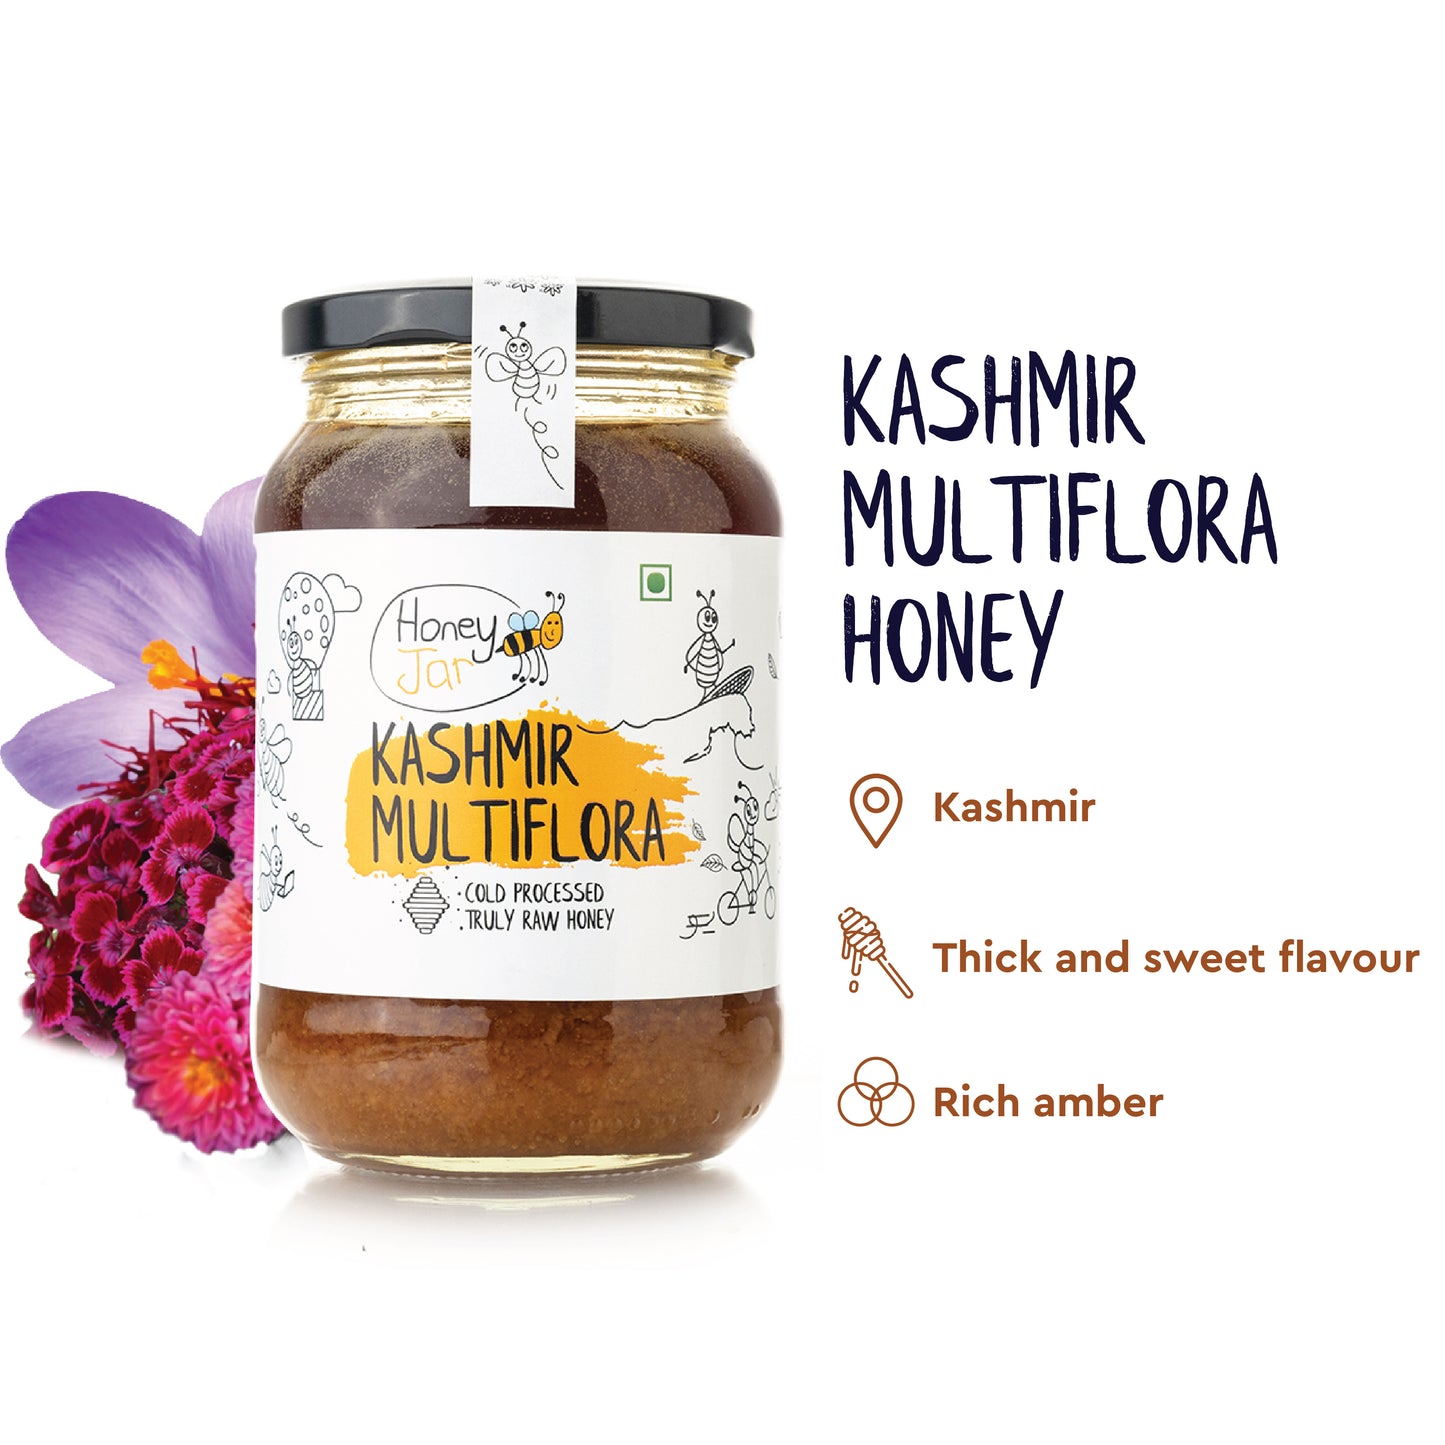 Kashmir Multiflora Raw Honey | Pure Honey - NMR Tested